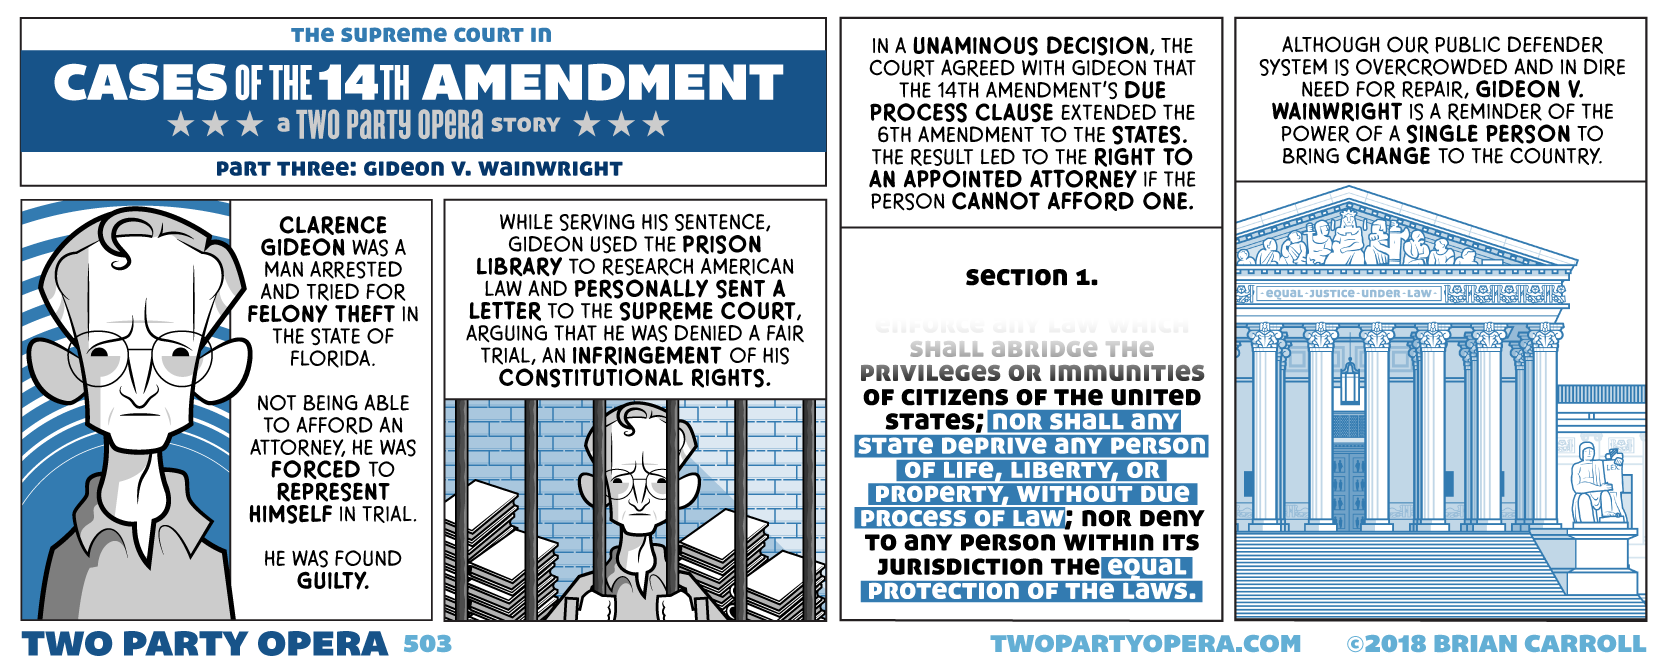 Cases of the 14th Amendment – Part Three: Gideon v. Wainwright